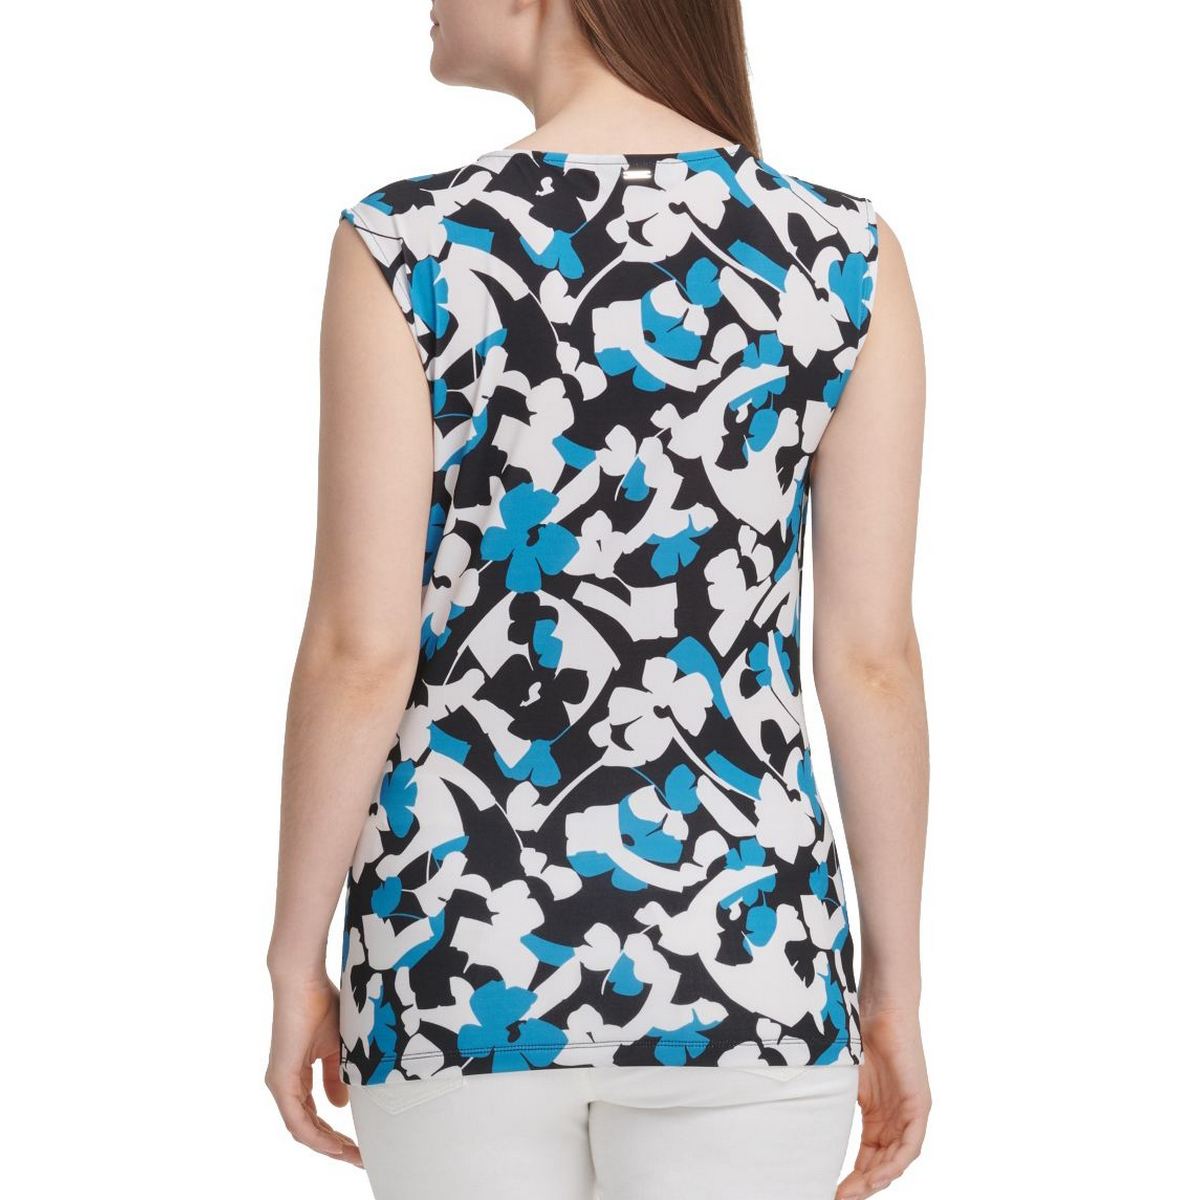 DKNY NEW Women's Black Sleeveless Printed Cowl-neck Blouse Shirt Top L TEDO